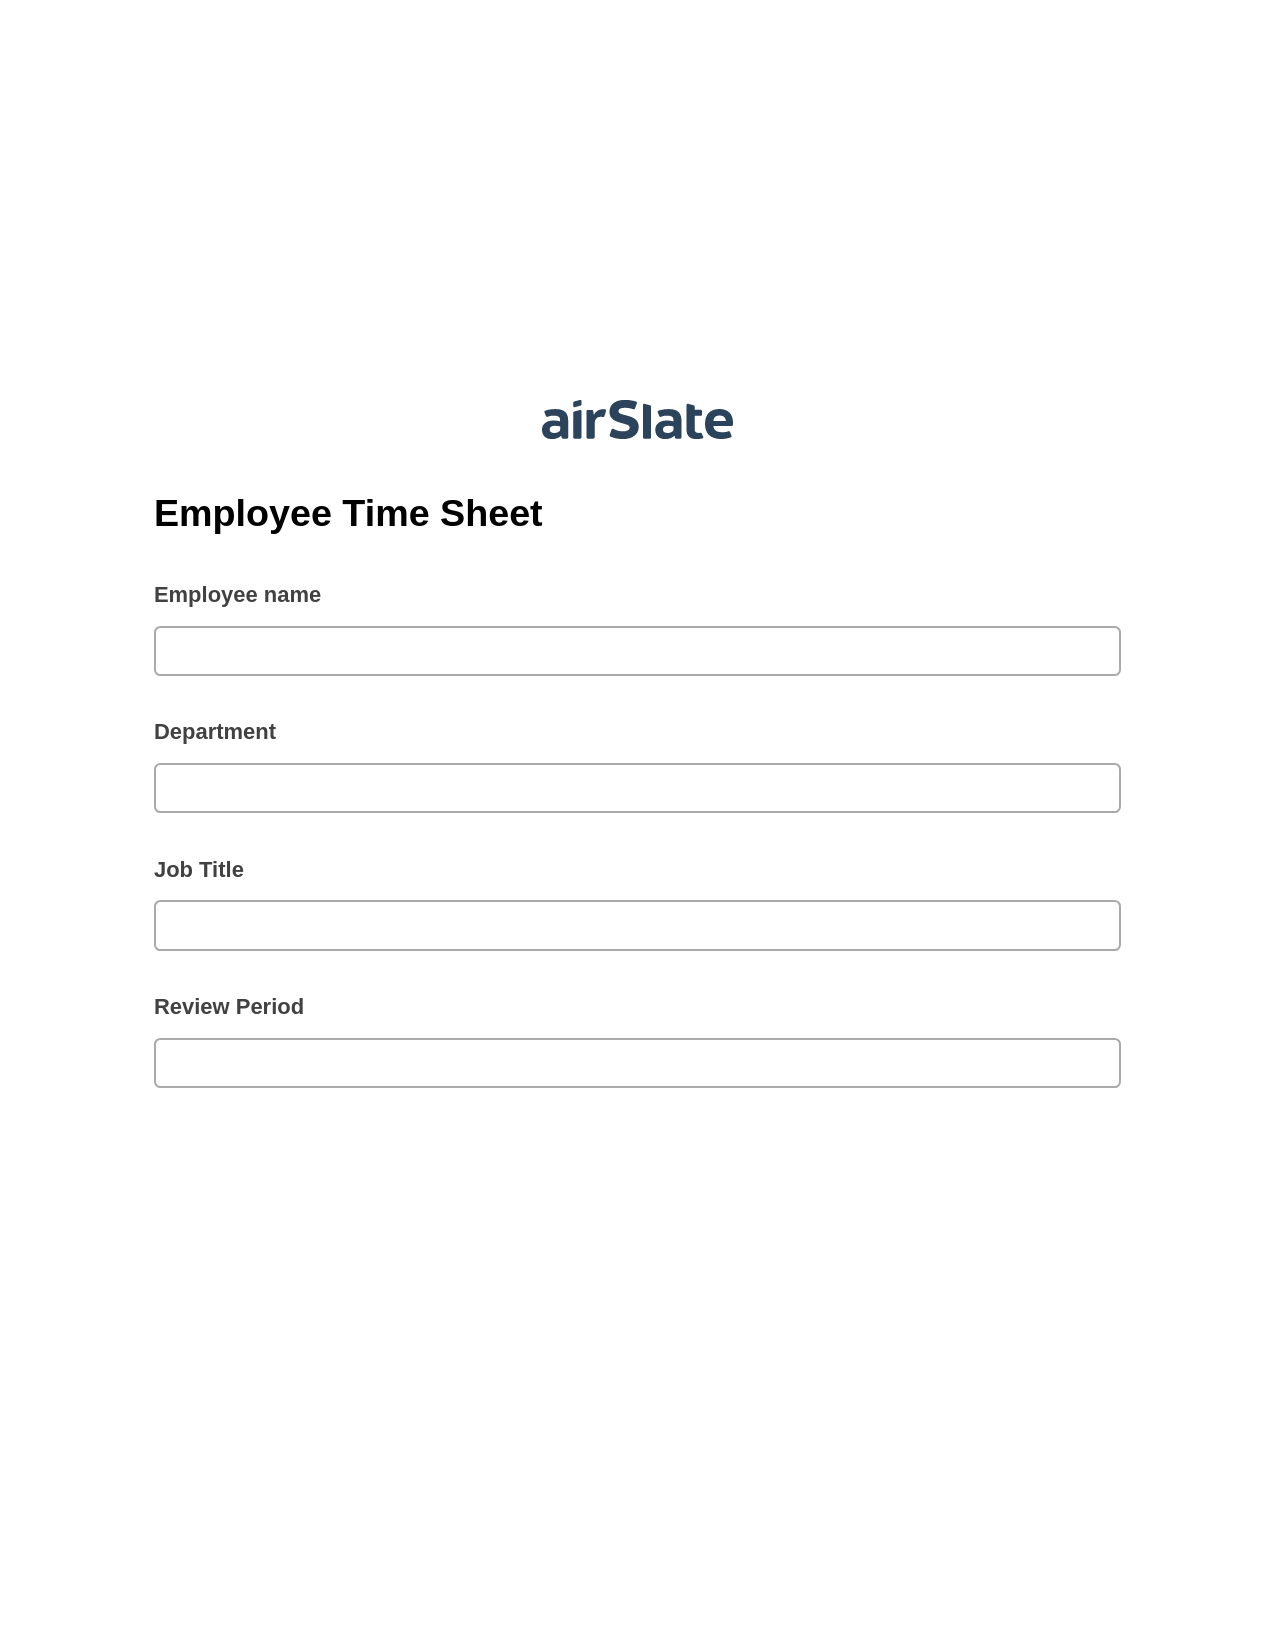 Employee Time Sheet Pre-fill from Smartsheet Bot, Update Audit Trail Bot, Export to WebMerge Bot